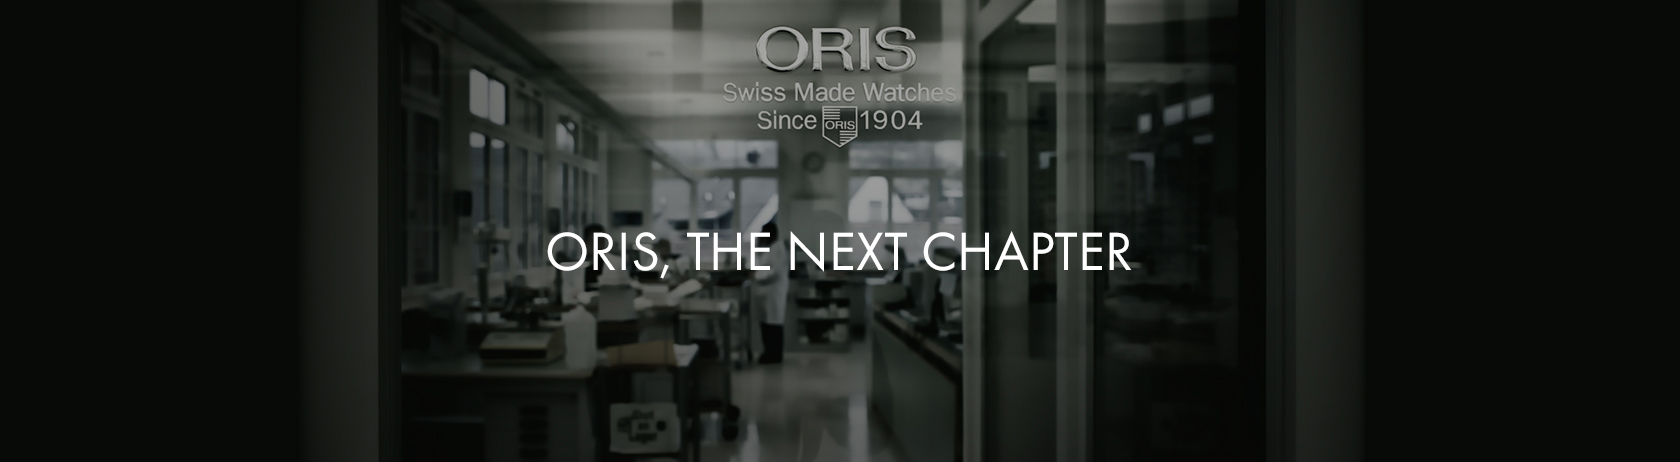 oris the next chapter